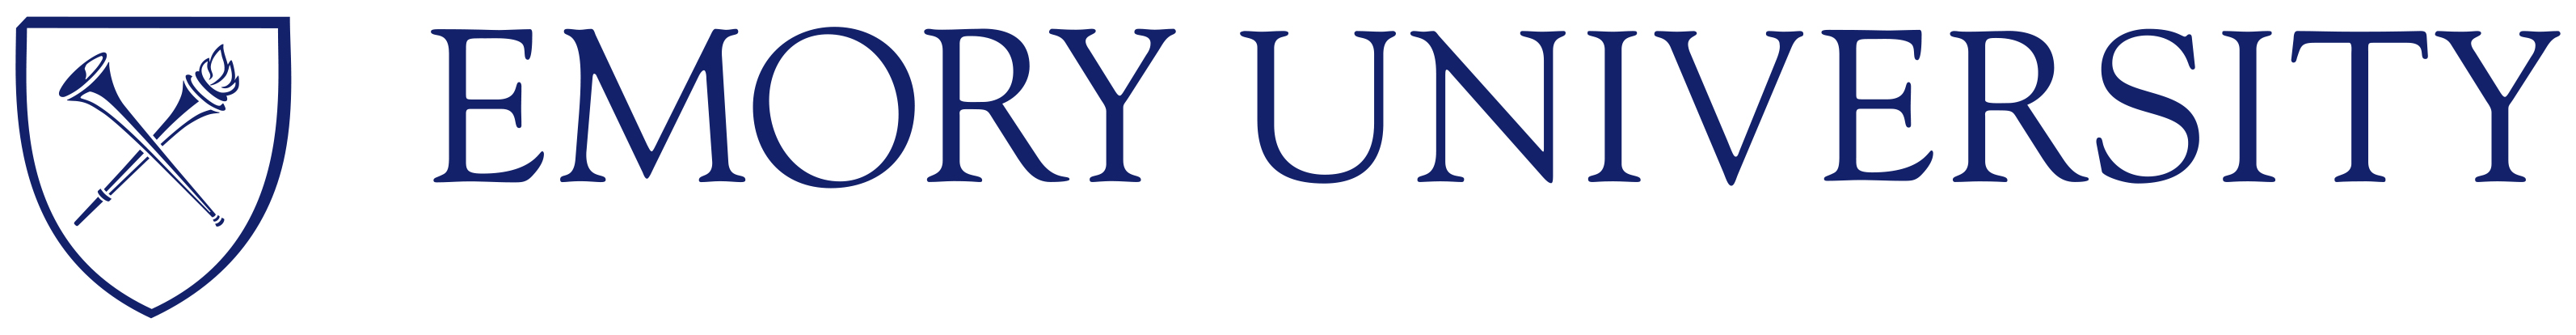 Emory University primary logo with shield